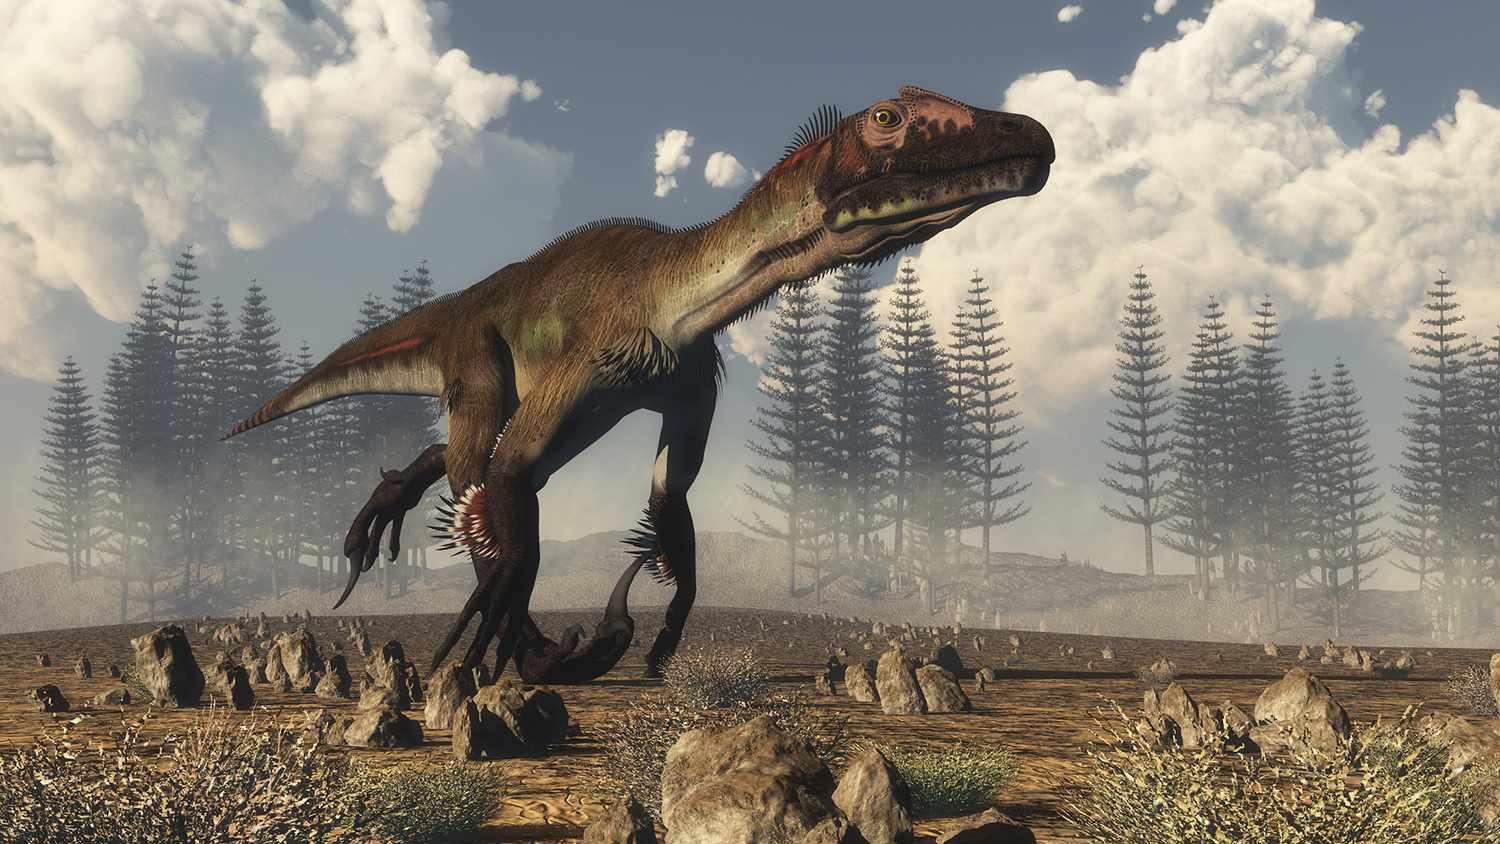 17 interesting facts about Utahraptor